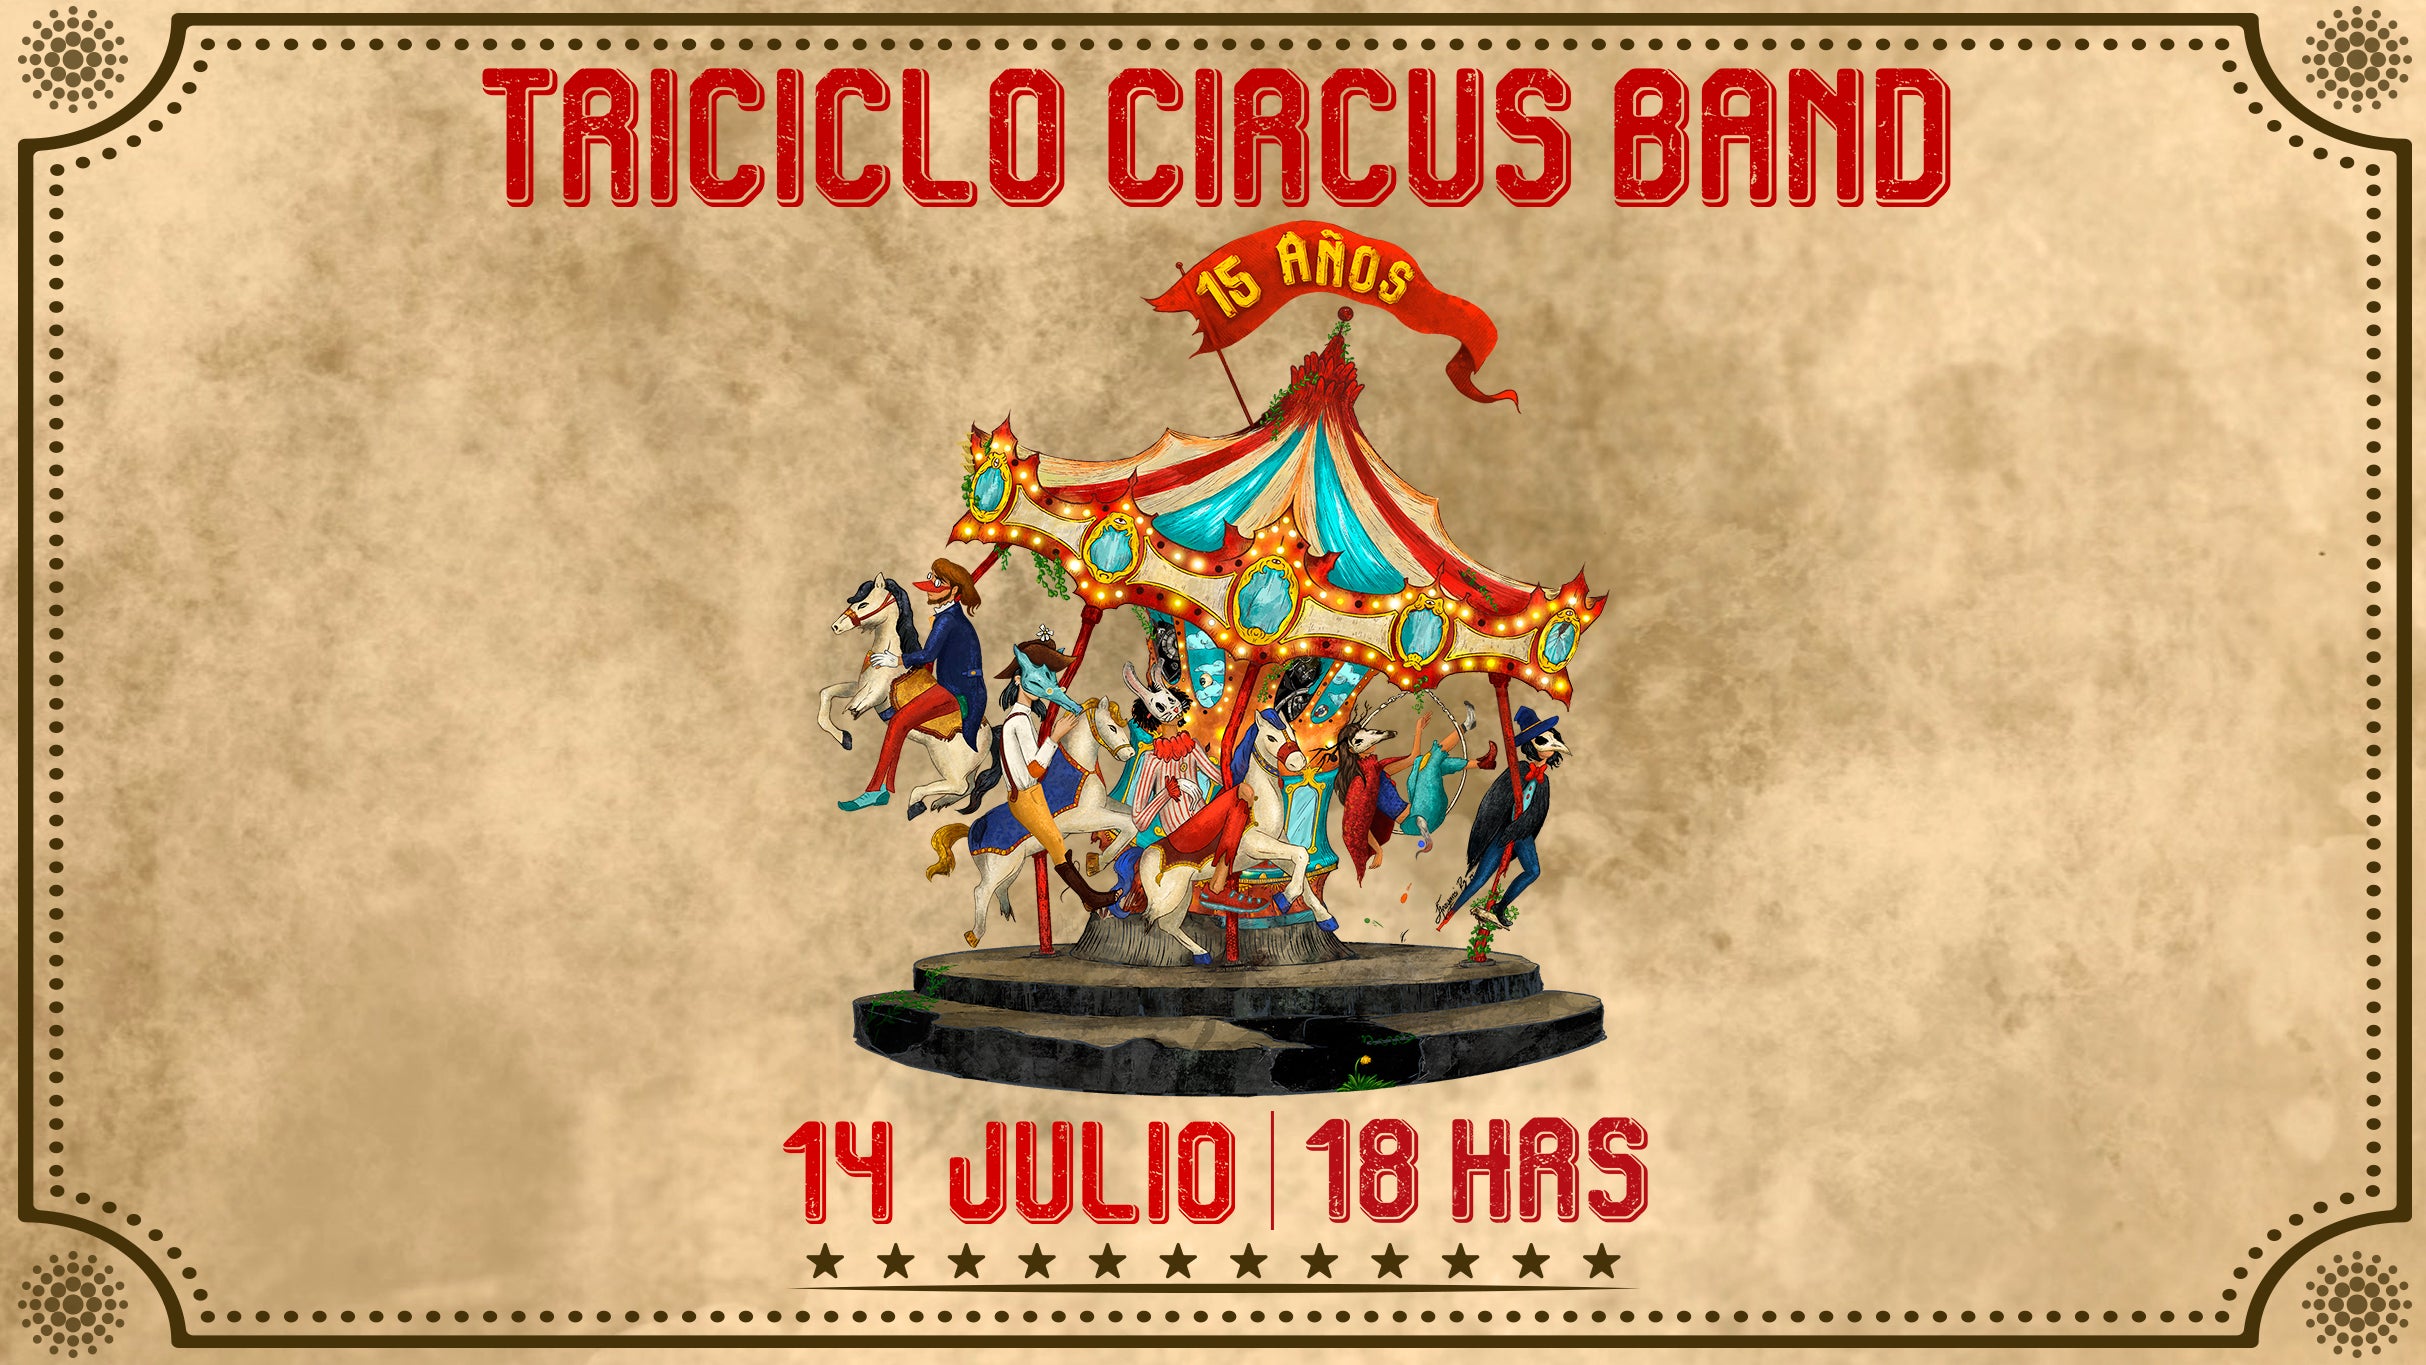 Triciclo Circus Band presale information on freepresalepasswords.com